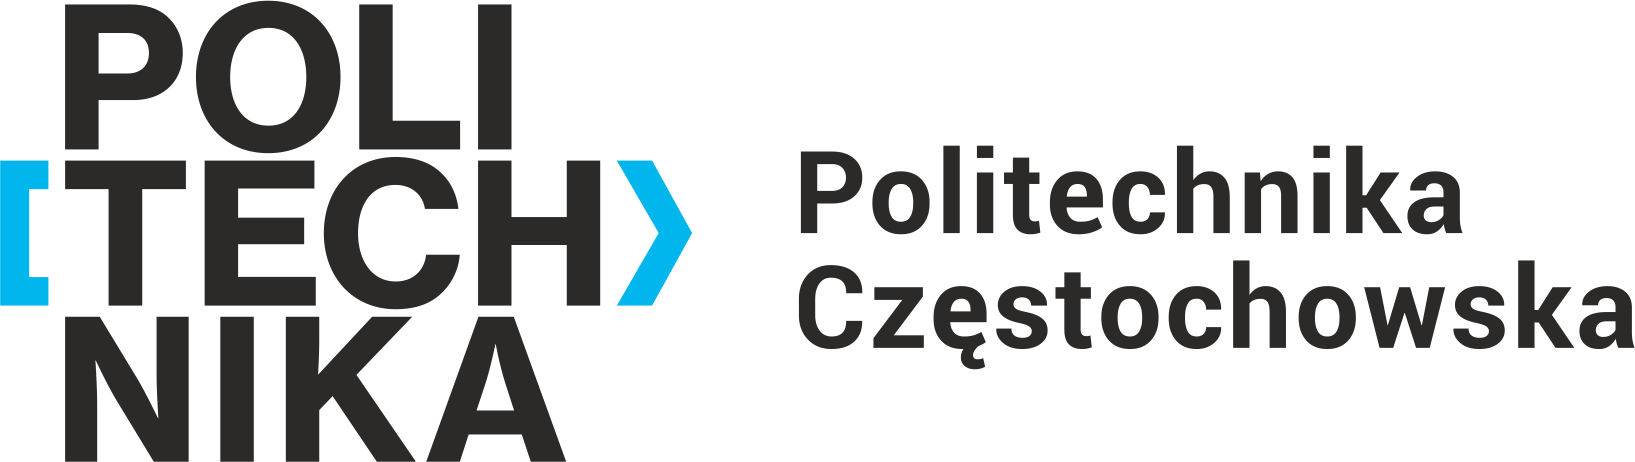 logo_pl.png